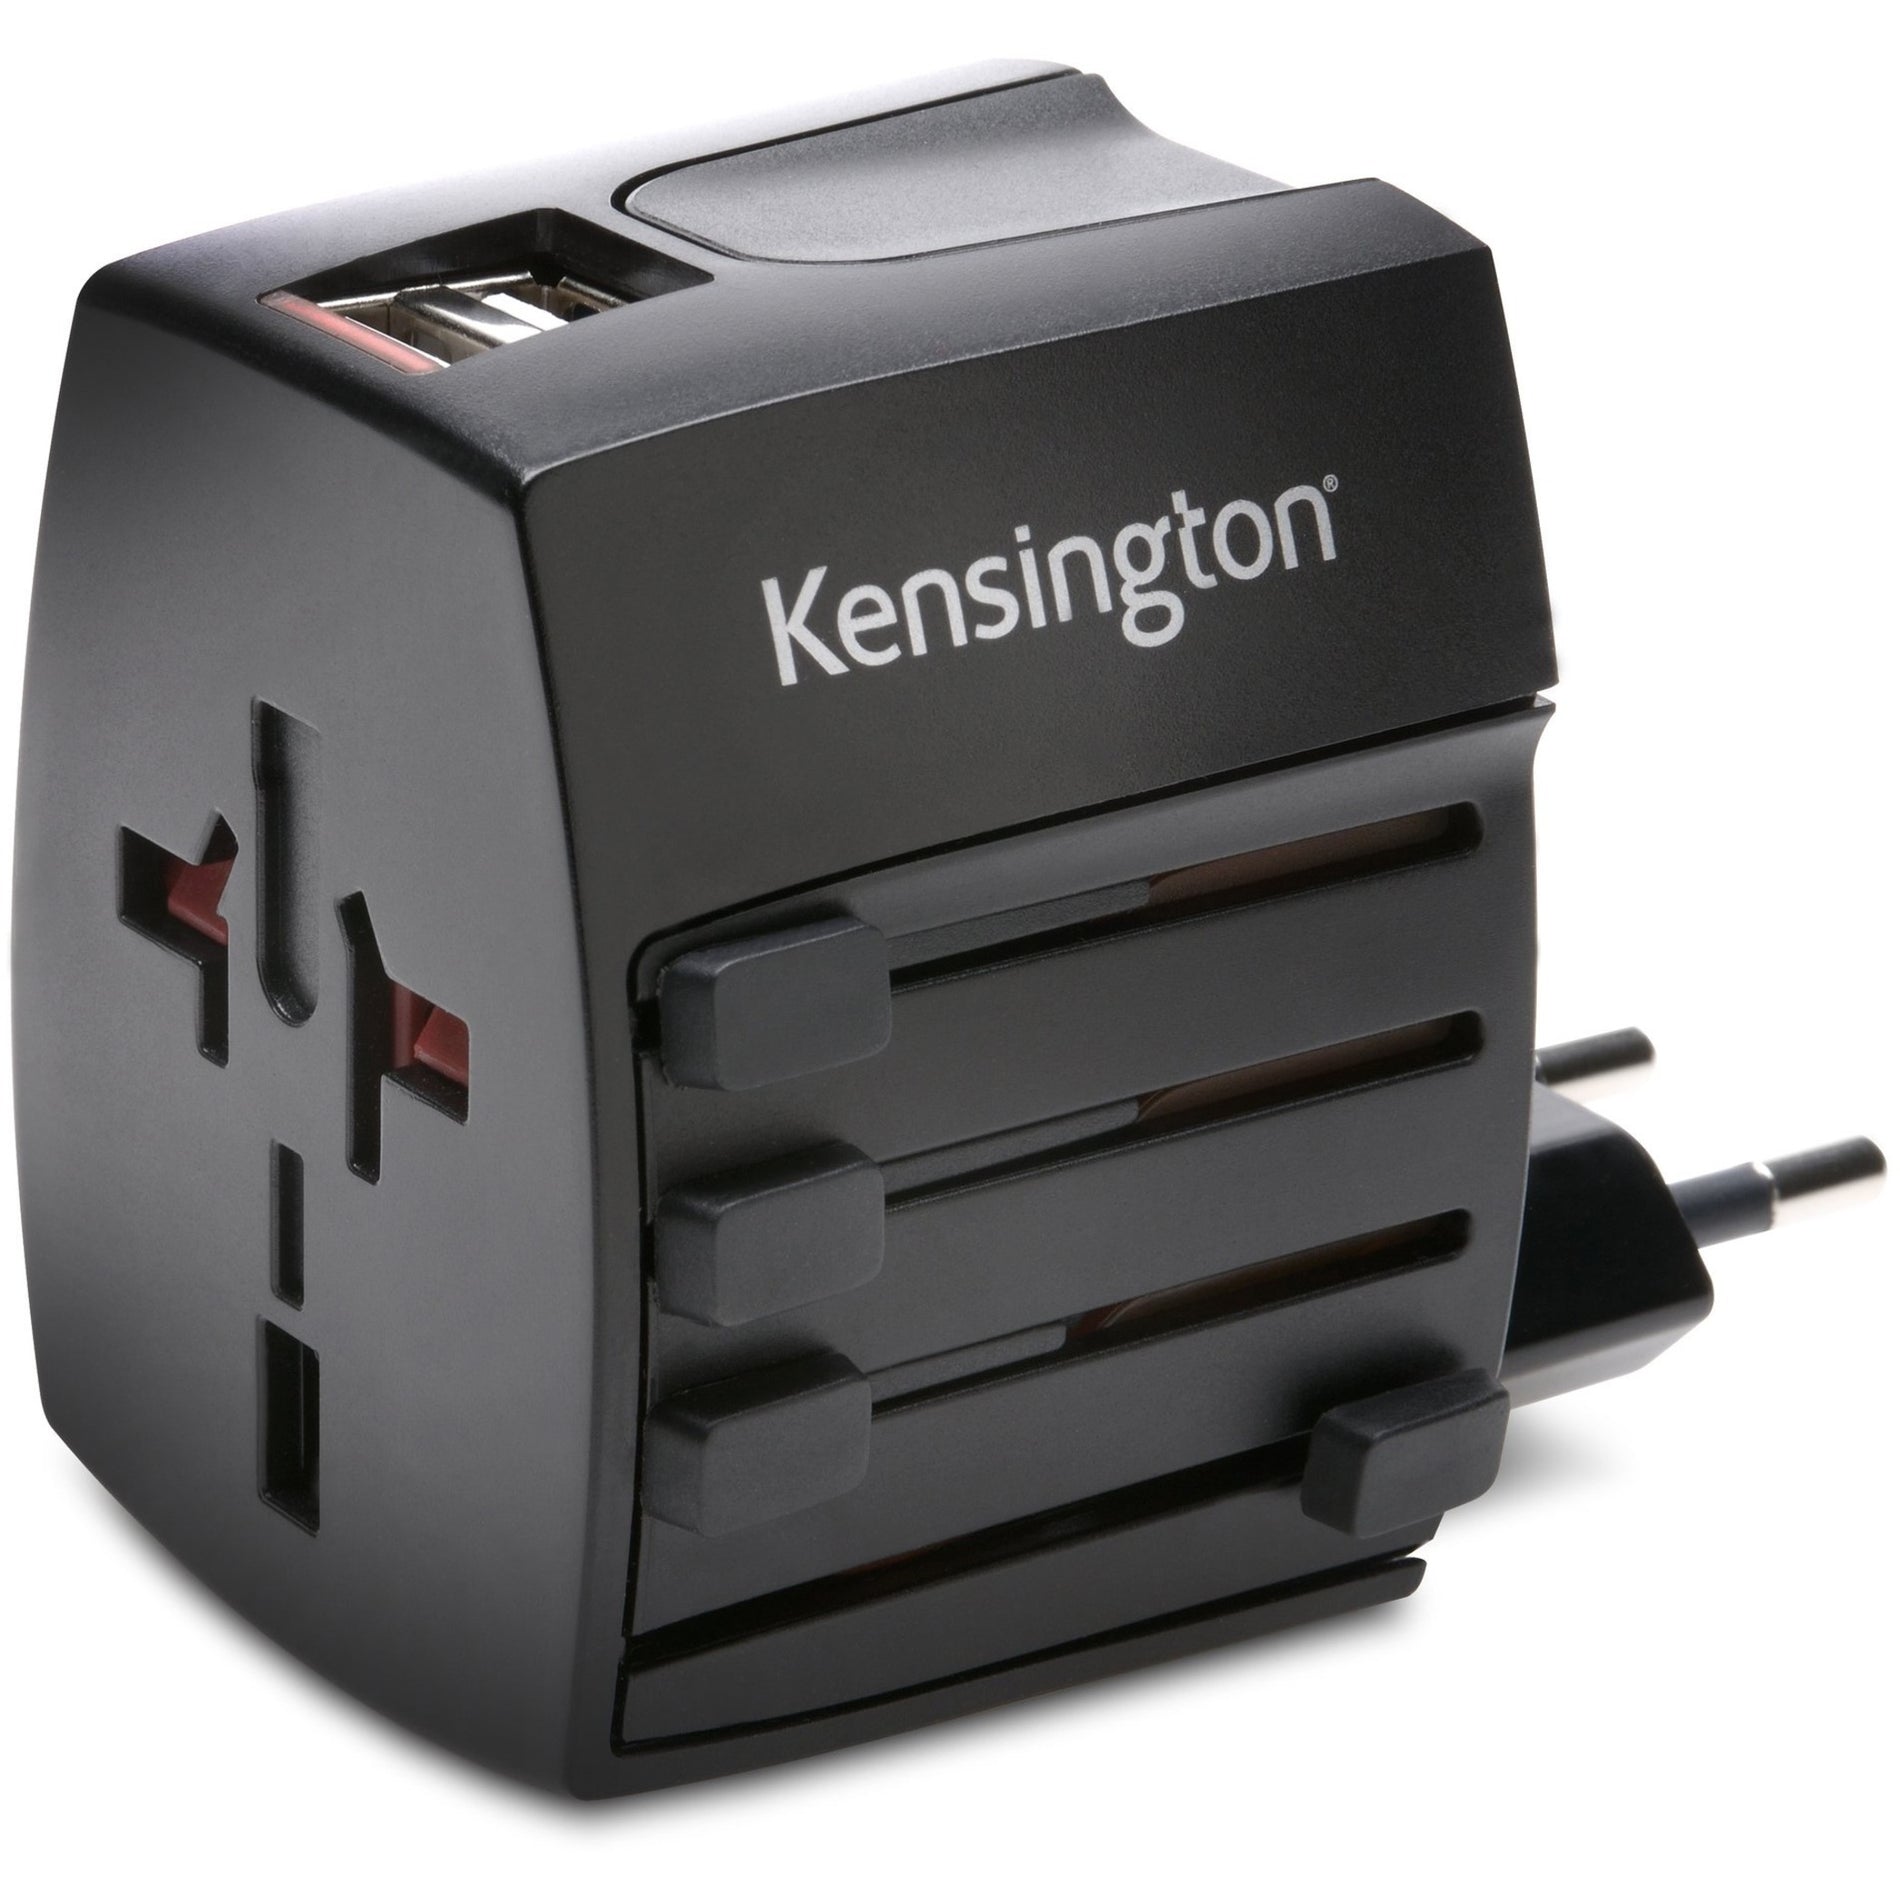 Kensington International Travel Adapter - Universal AC Adapter for Worldwide Travel [Discontinued]